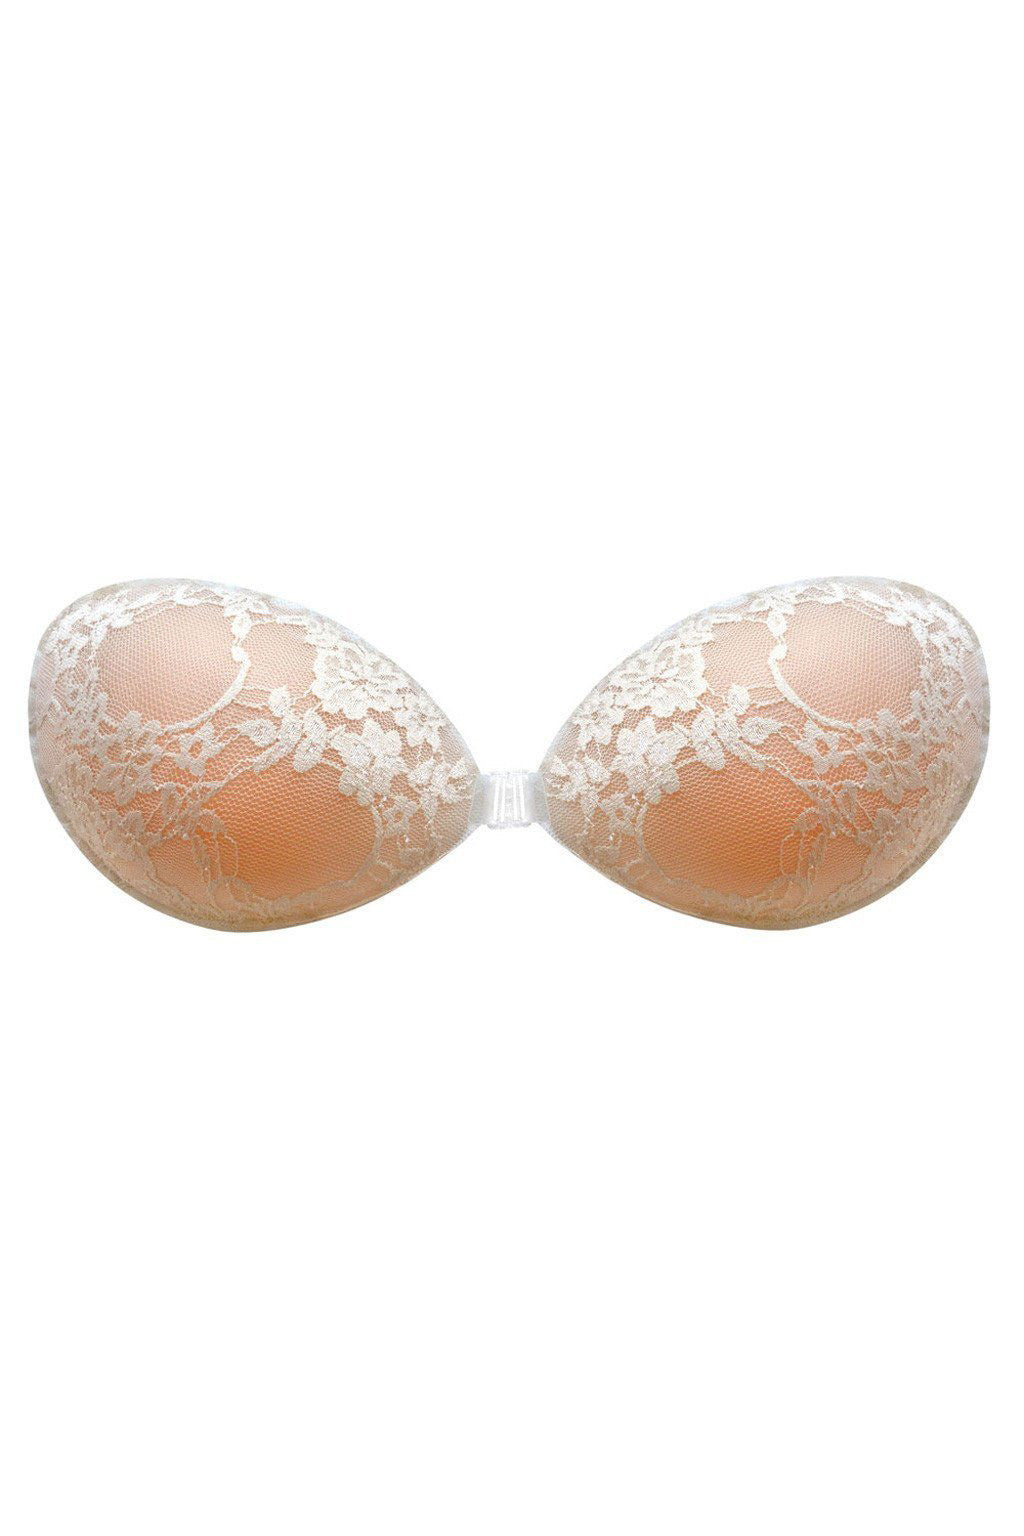 NWT $51 Victoria's Secret plunge adhesive bra